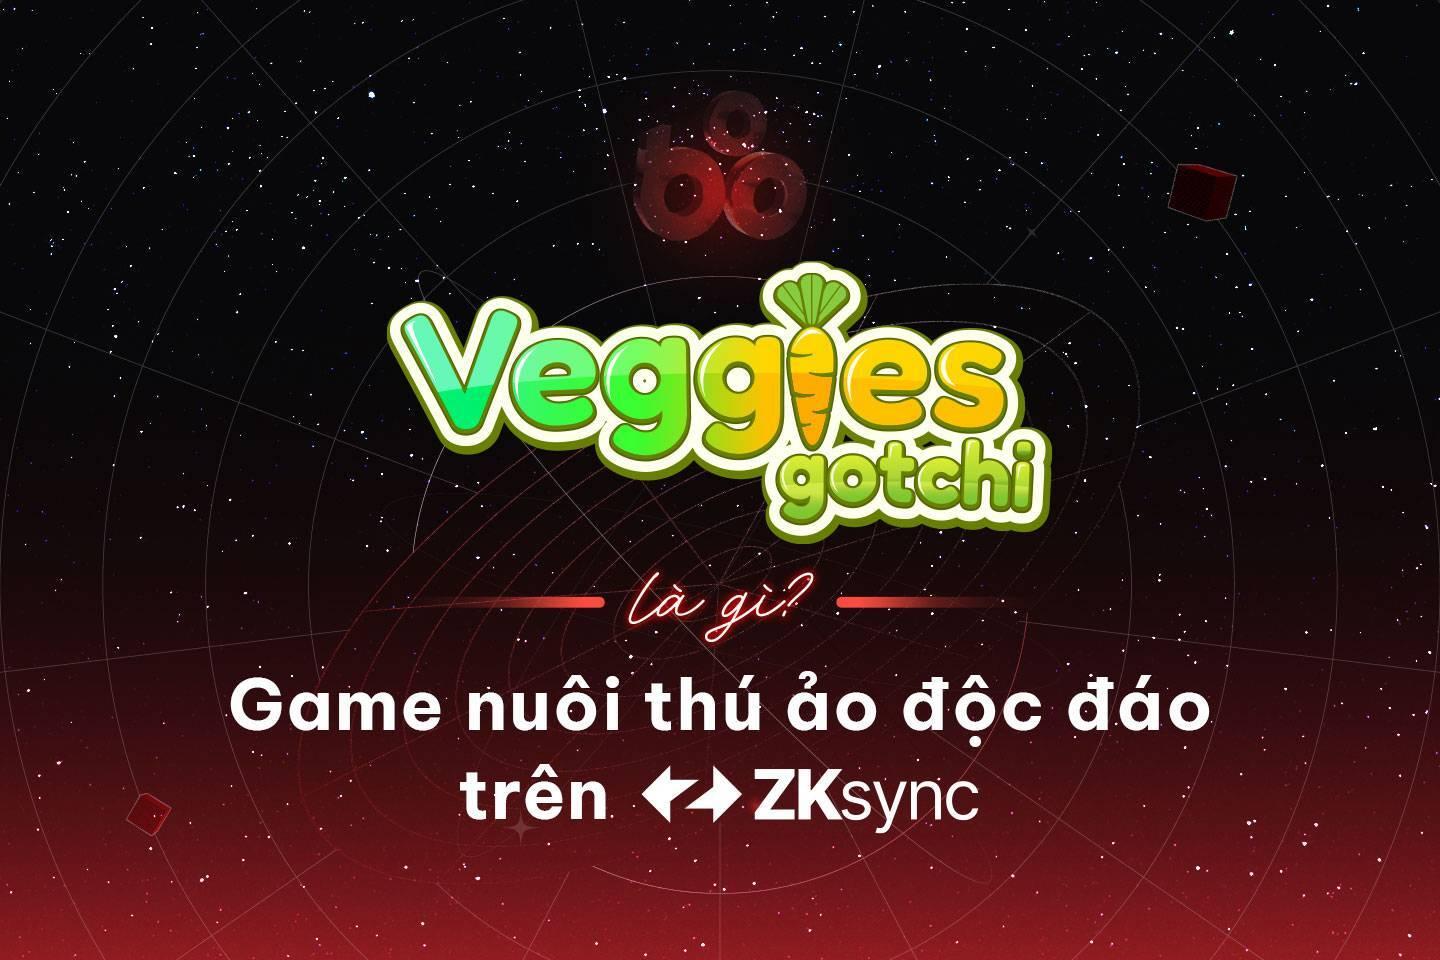 veggies-gotchi-vg-la-gi-game-nuoi-thu-ao-doc-dao-tren-zksync